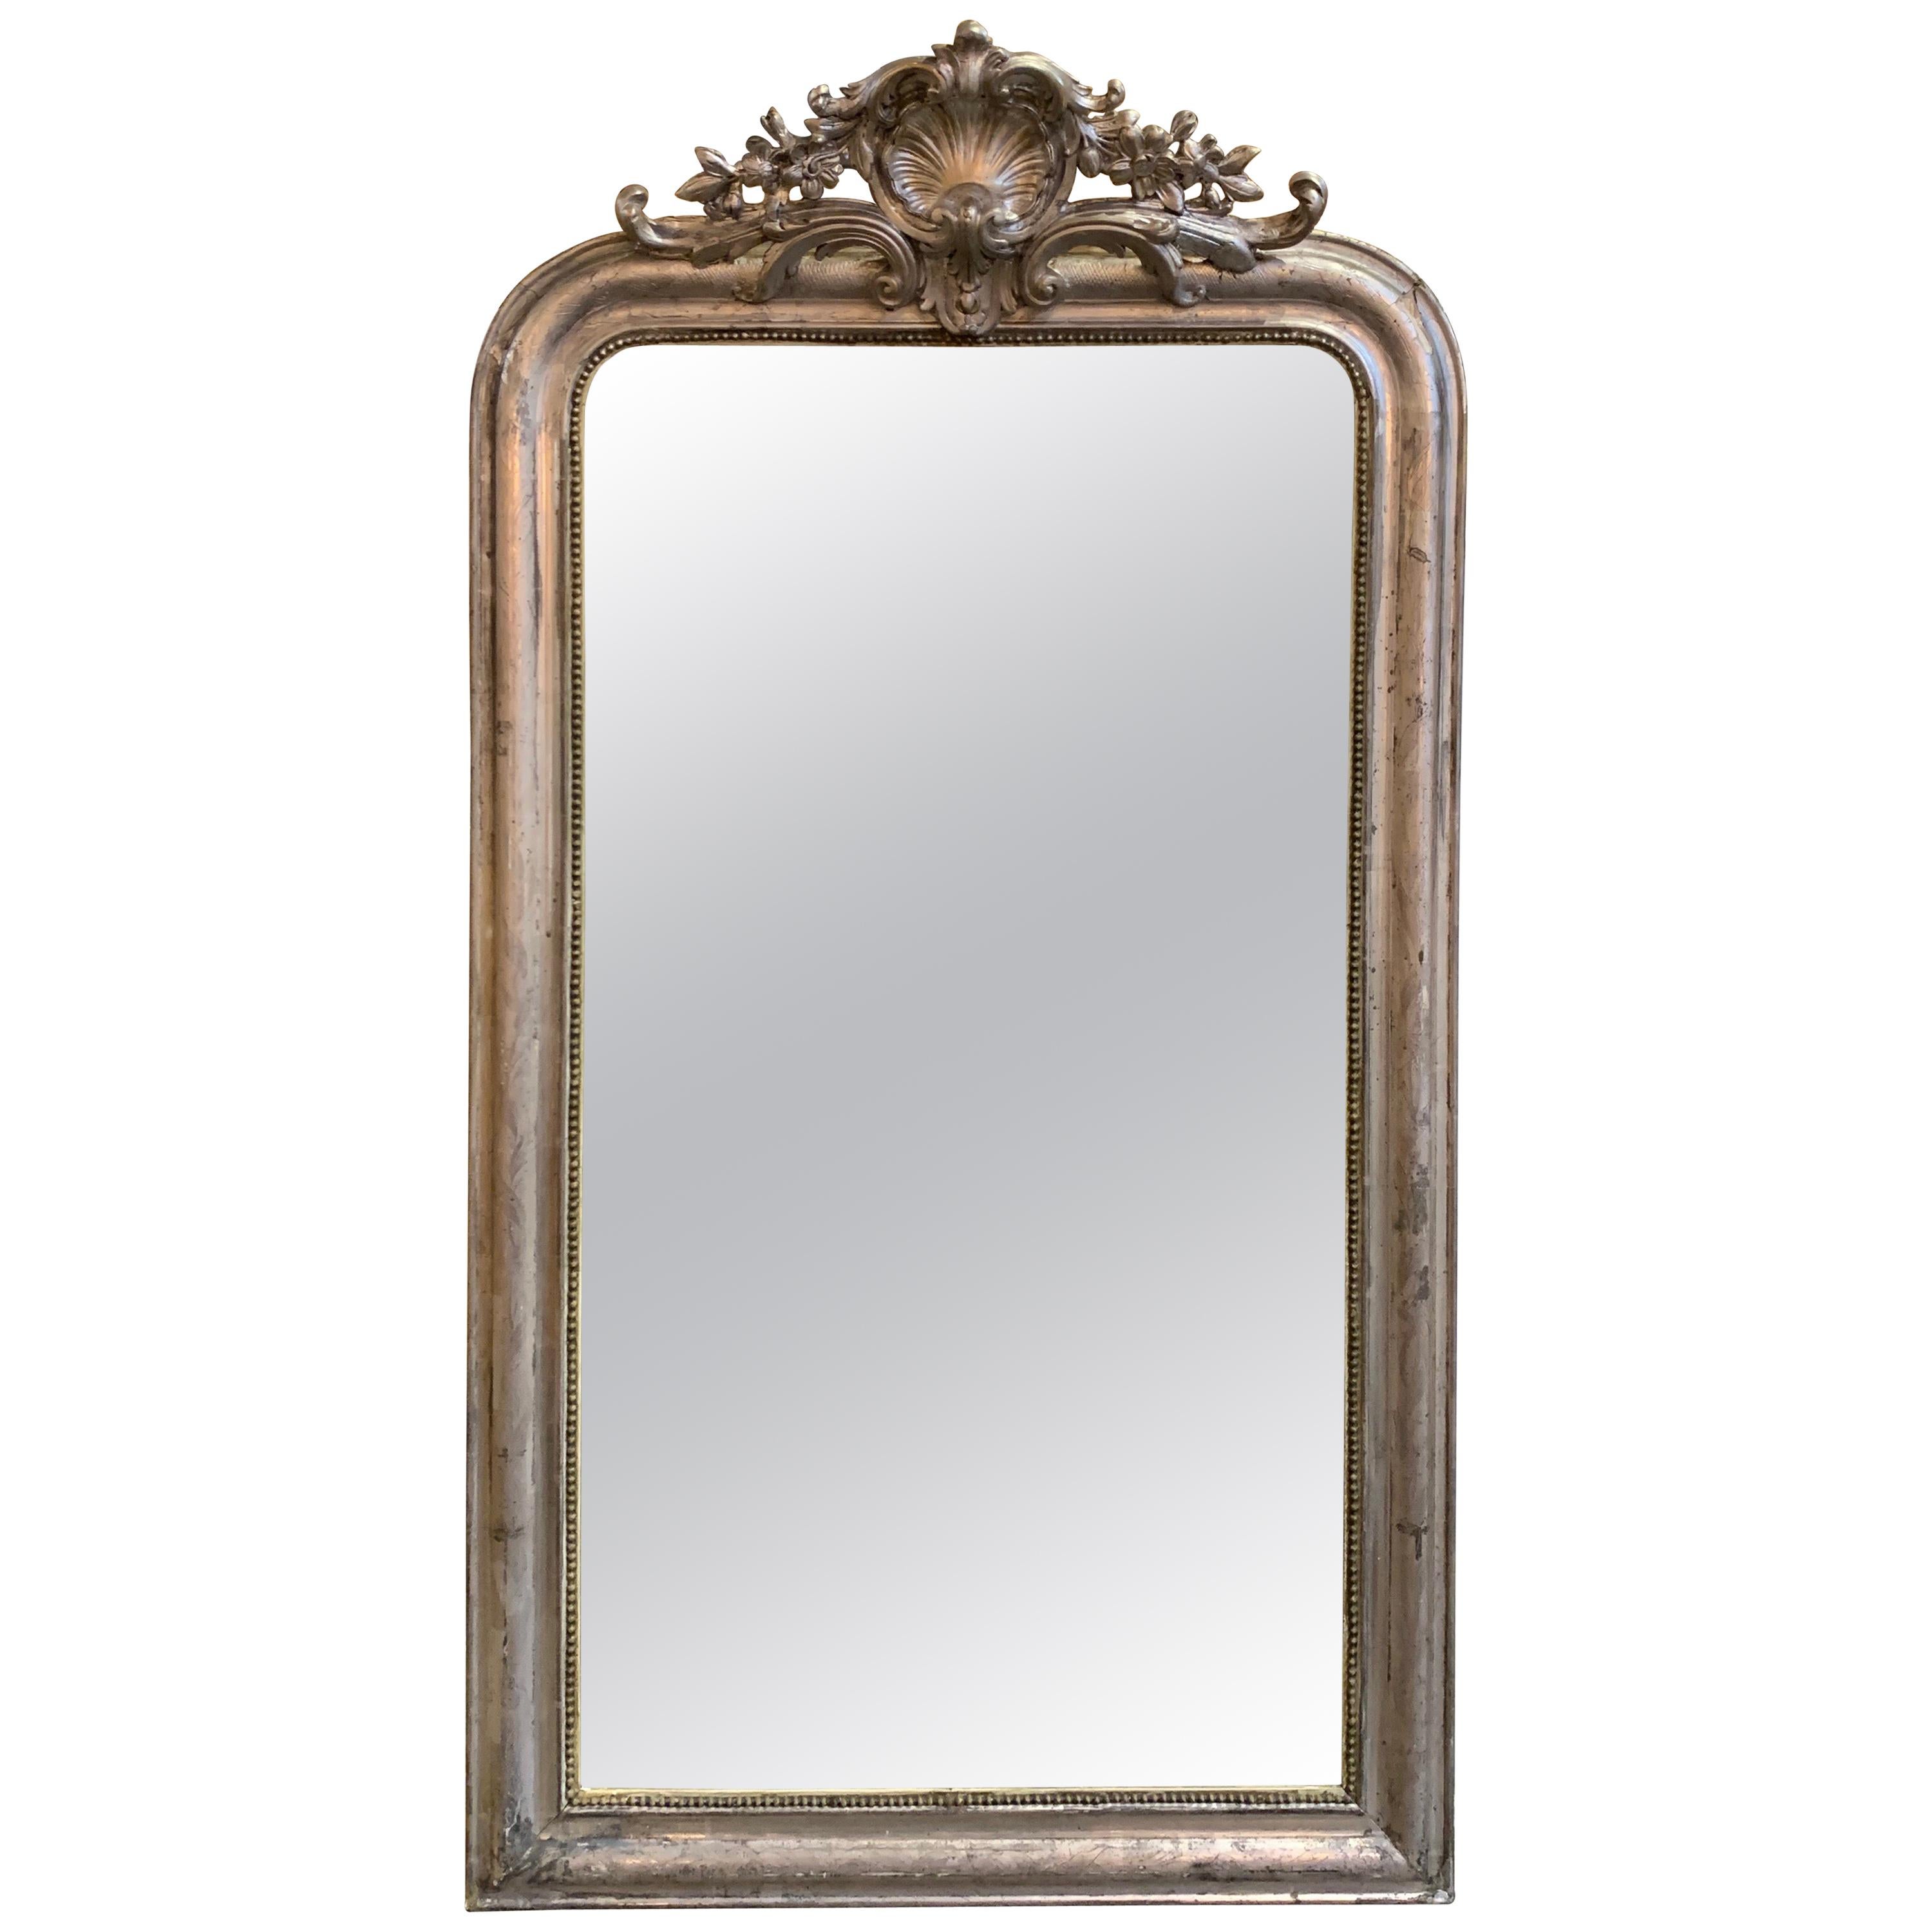 19th Century Louis Phillipe Mirror with Crest